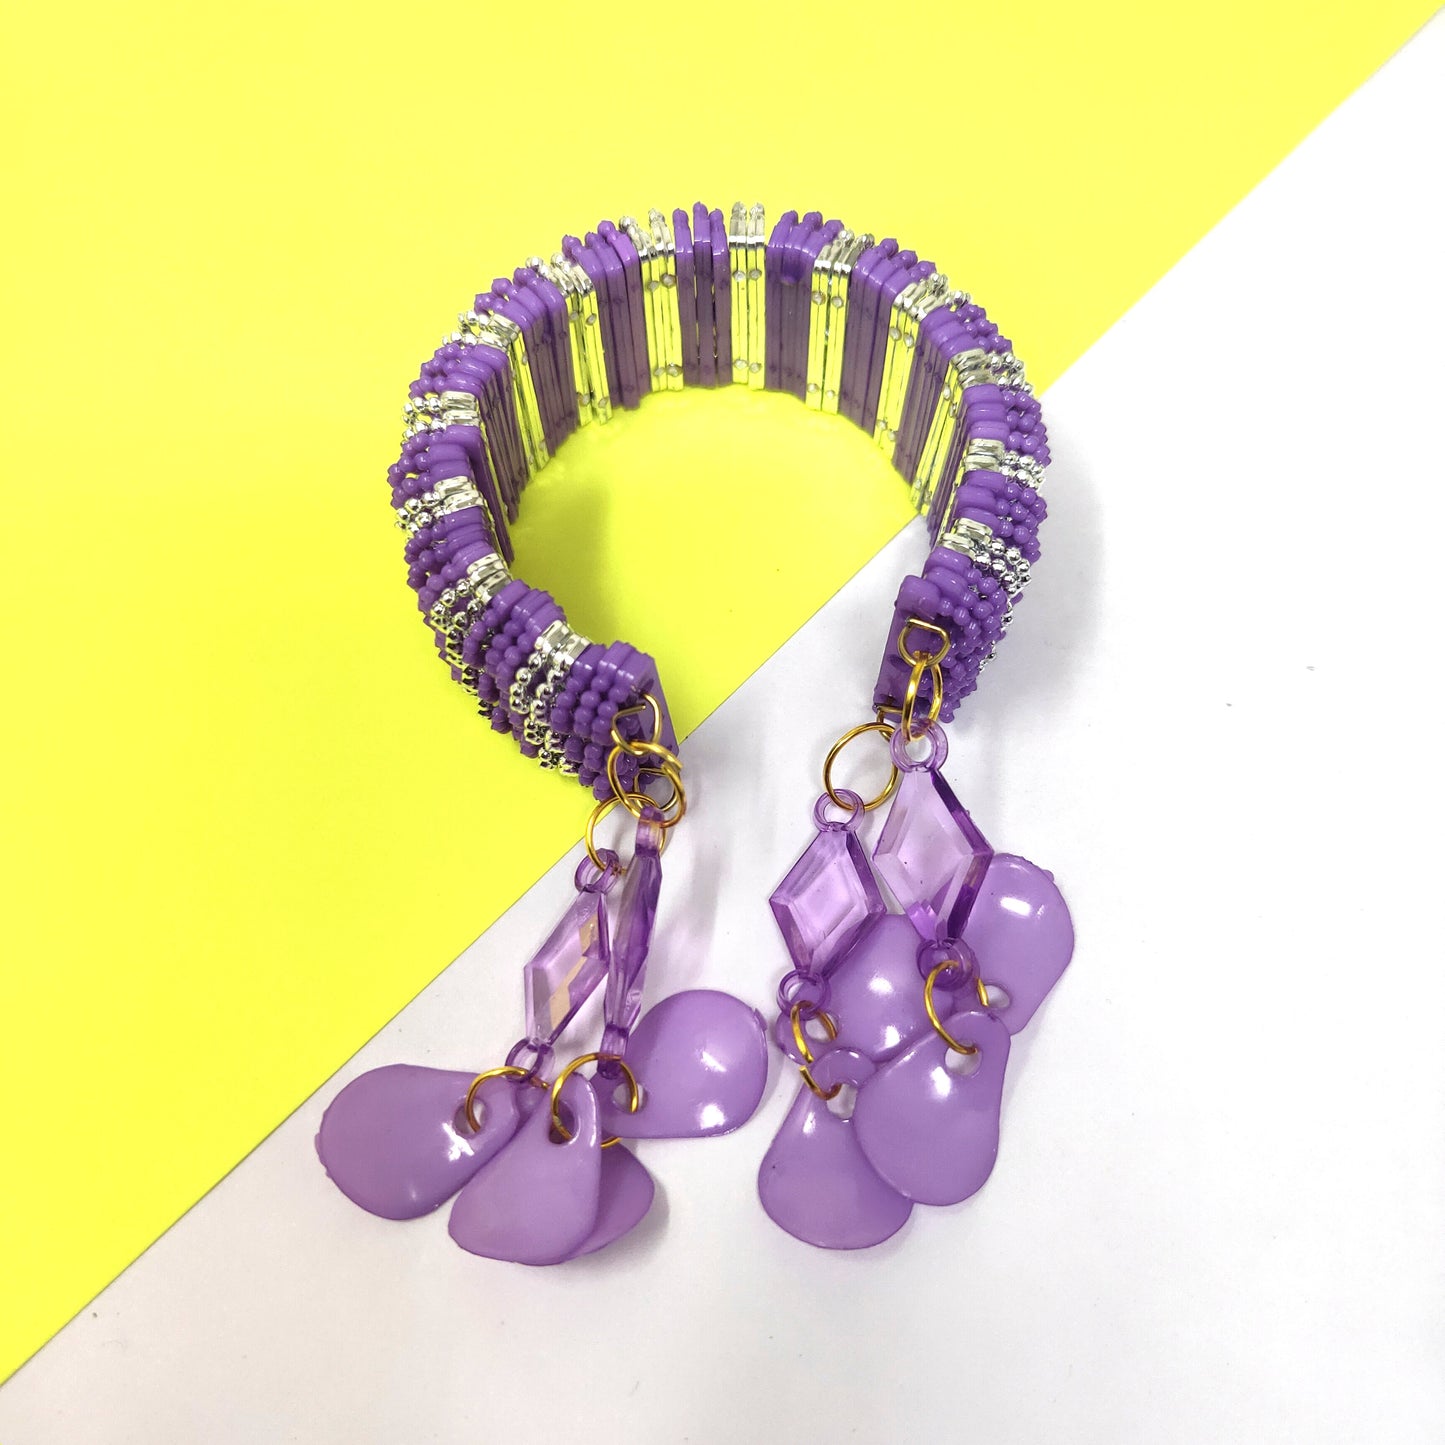 Anokhi Ada Plastic Beads Stylish Latkan Cuff Bangle Bracelet for Kids and Girls (AO-09 Bracelet)